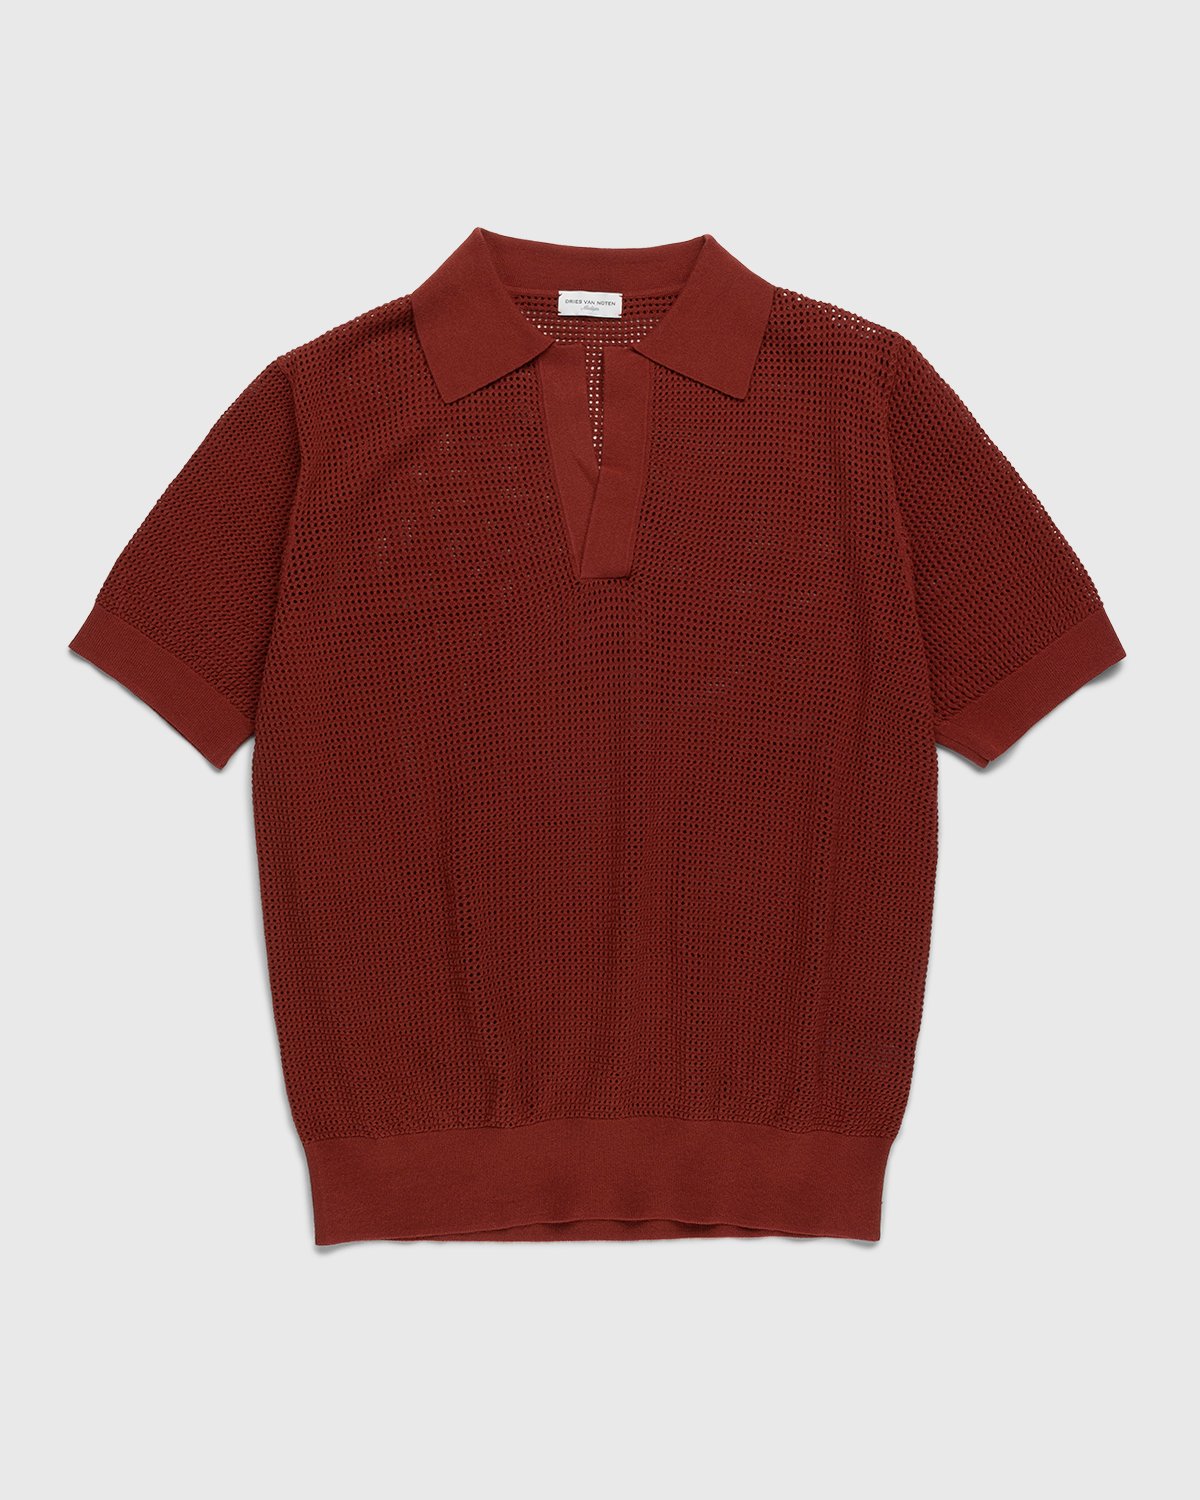 Dries van Noten - Jael Polo Shirt Brique - Clothing - Red - Image 1